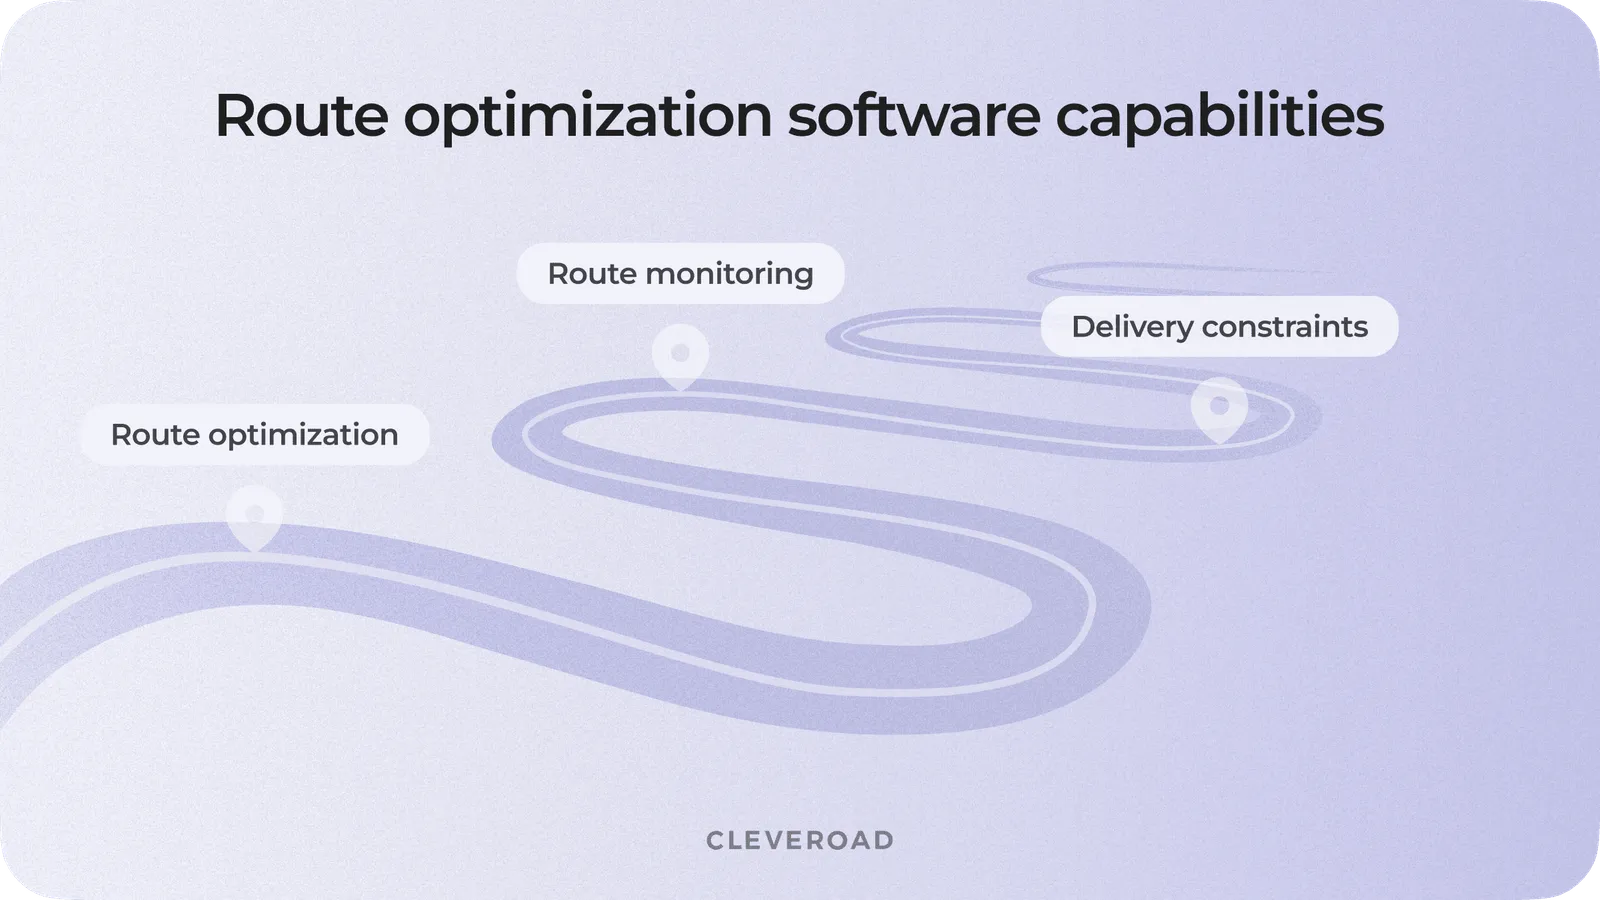 Route optiization capabilities